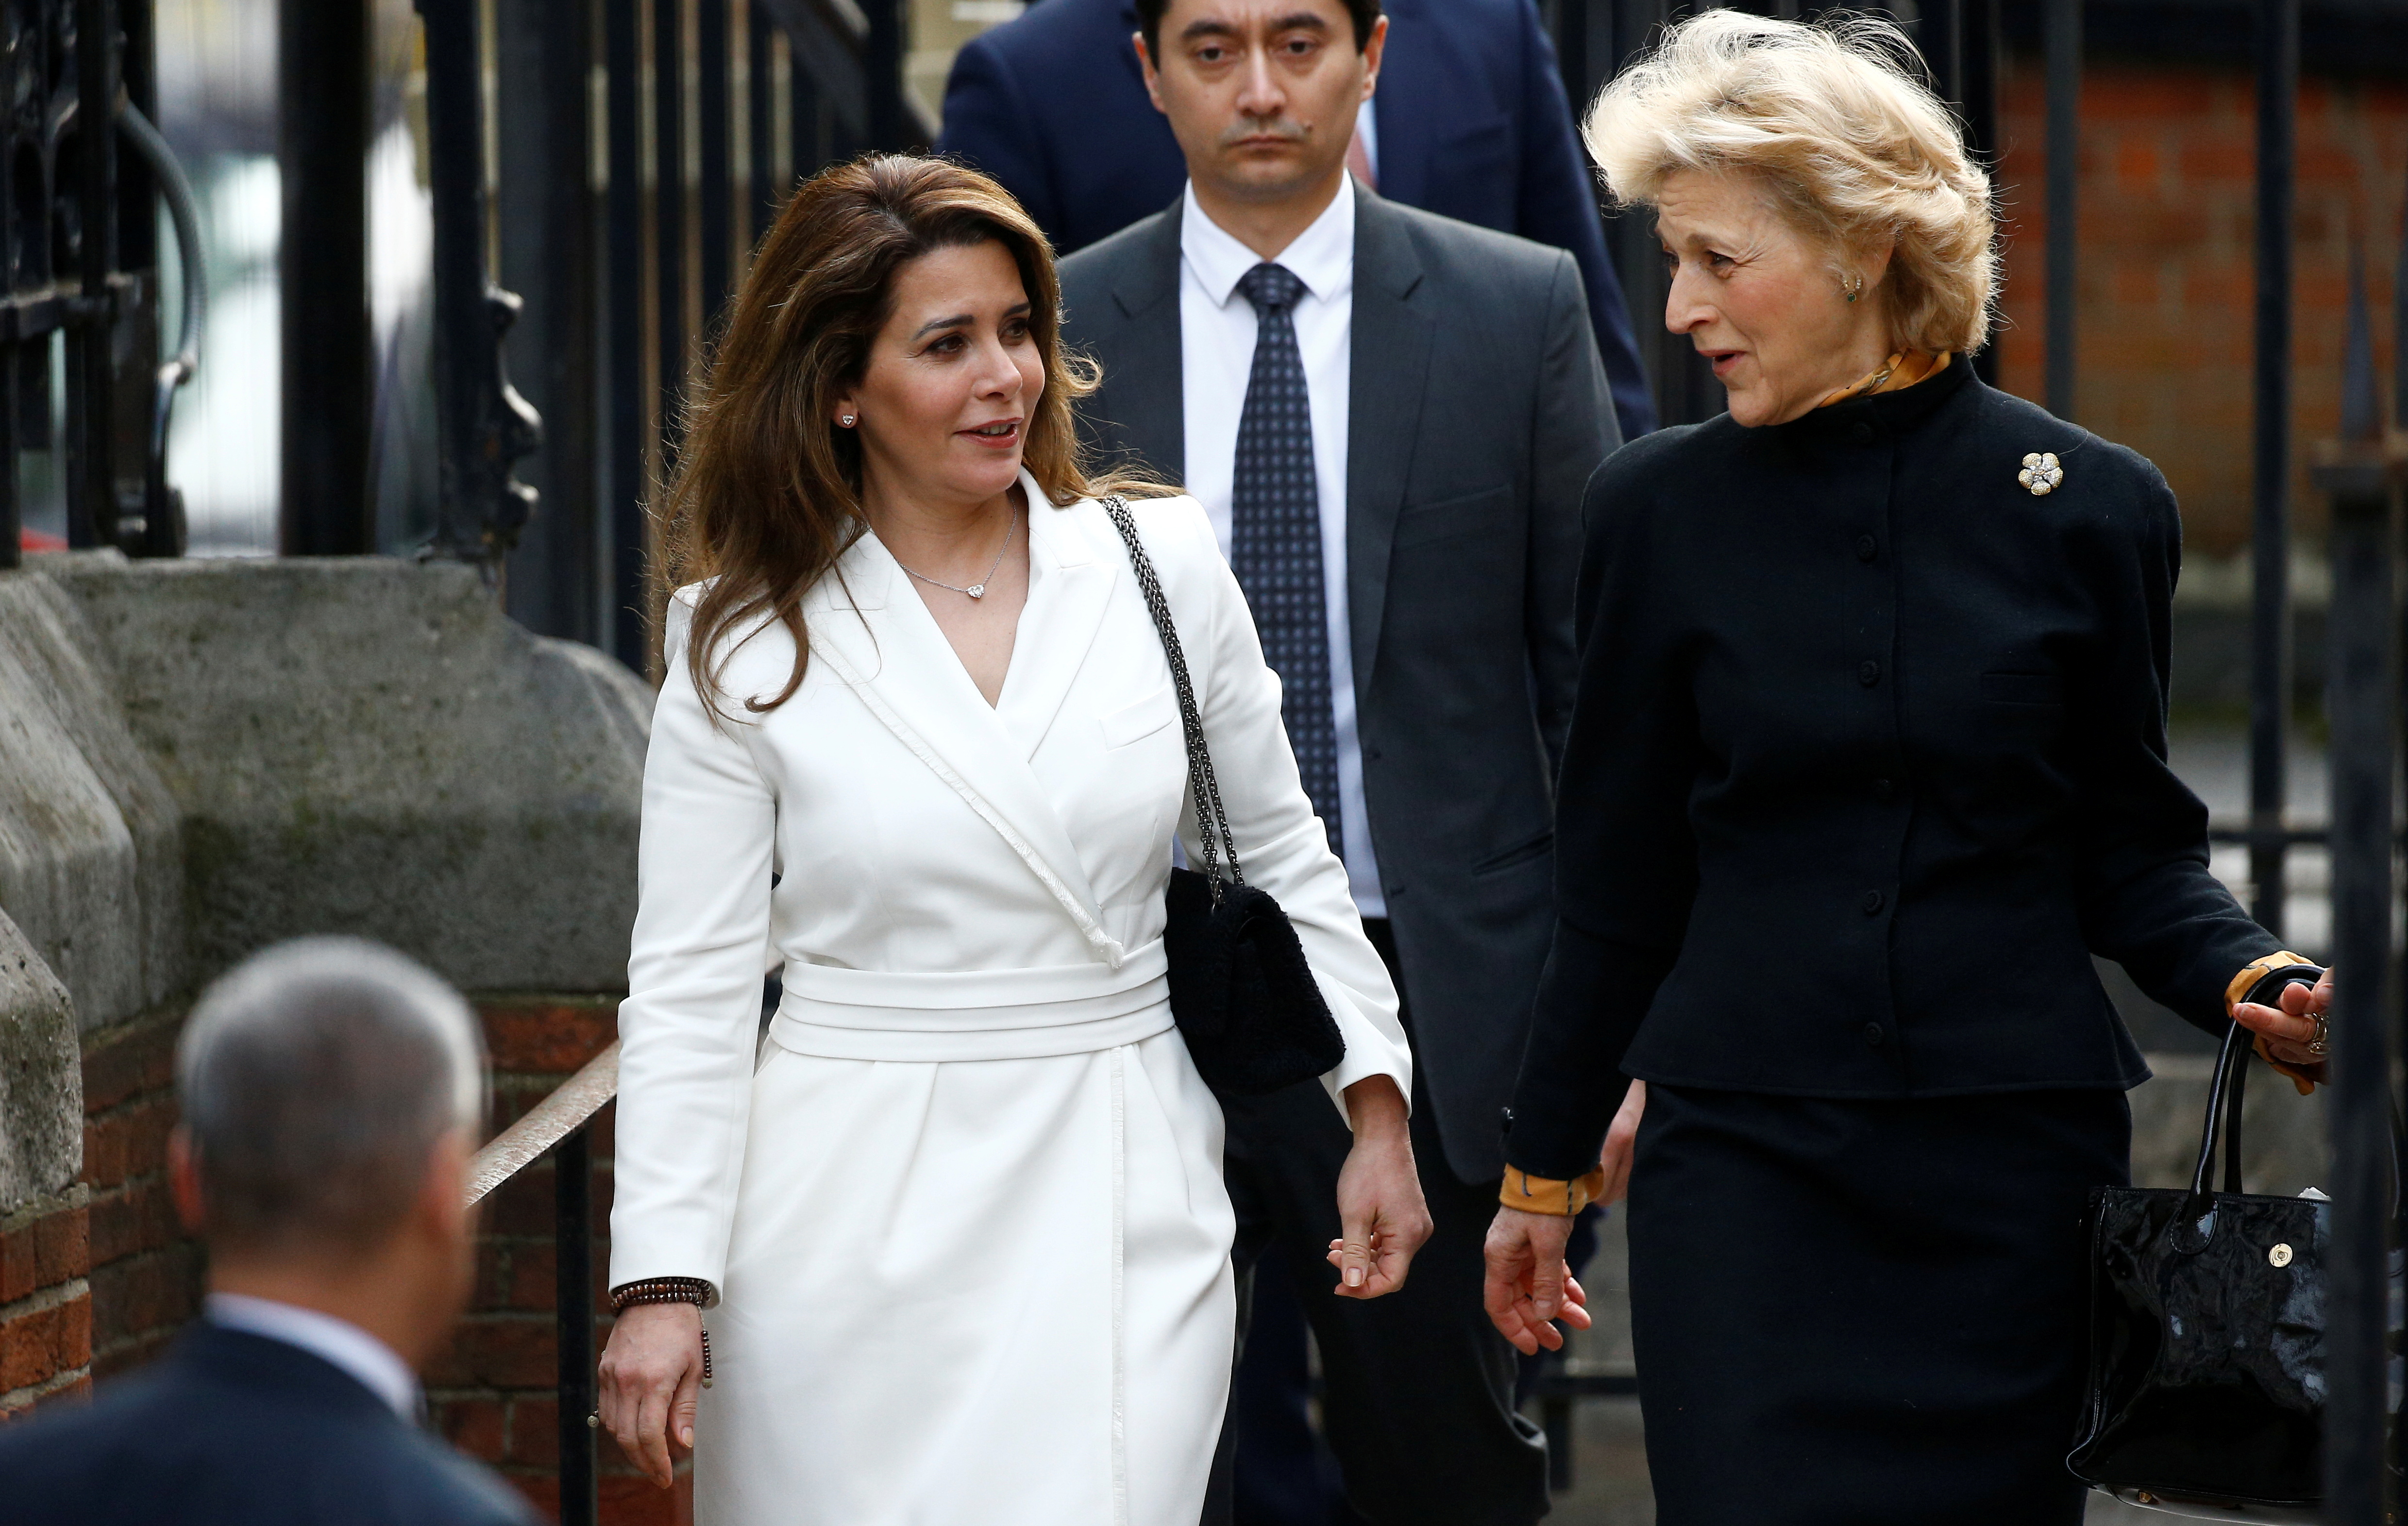 Princess Haya bint Al Hussein arrives at the High Court in London